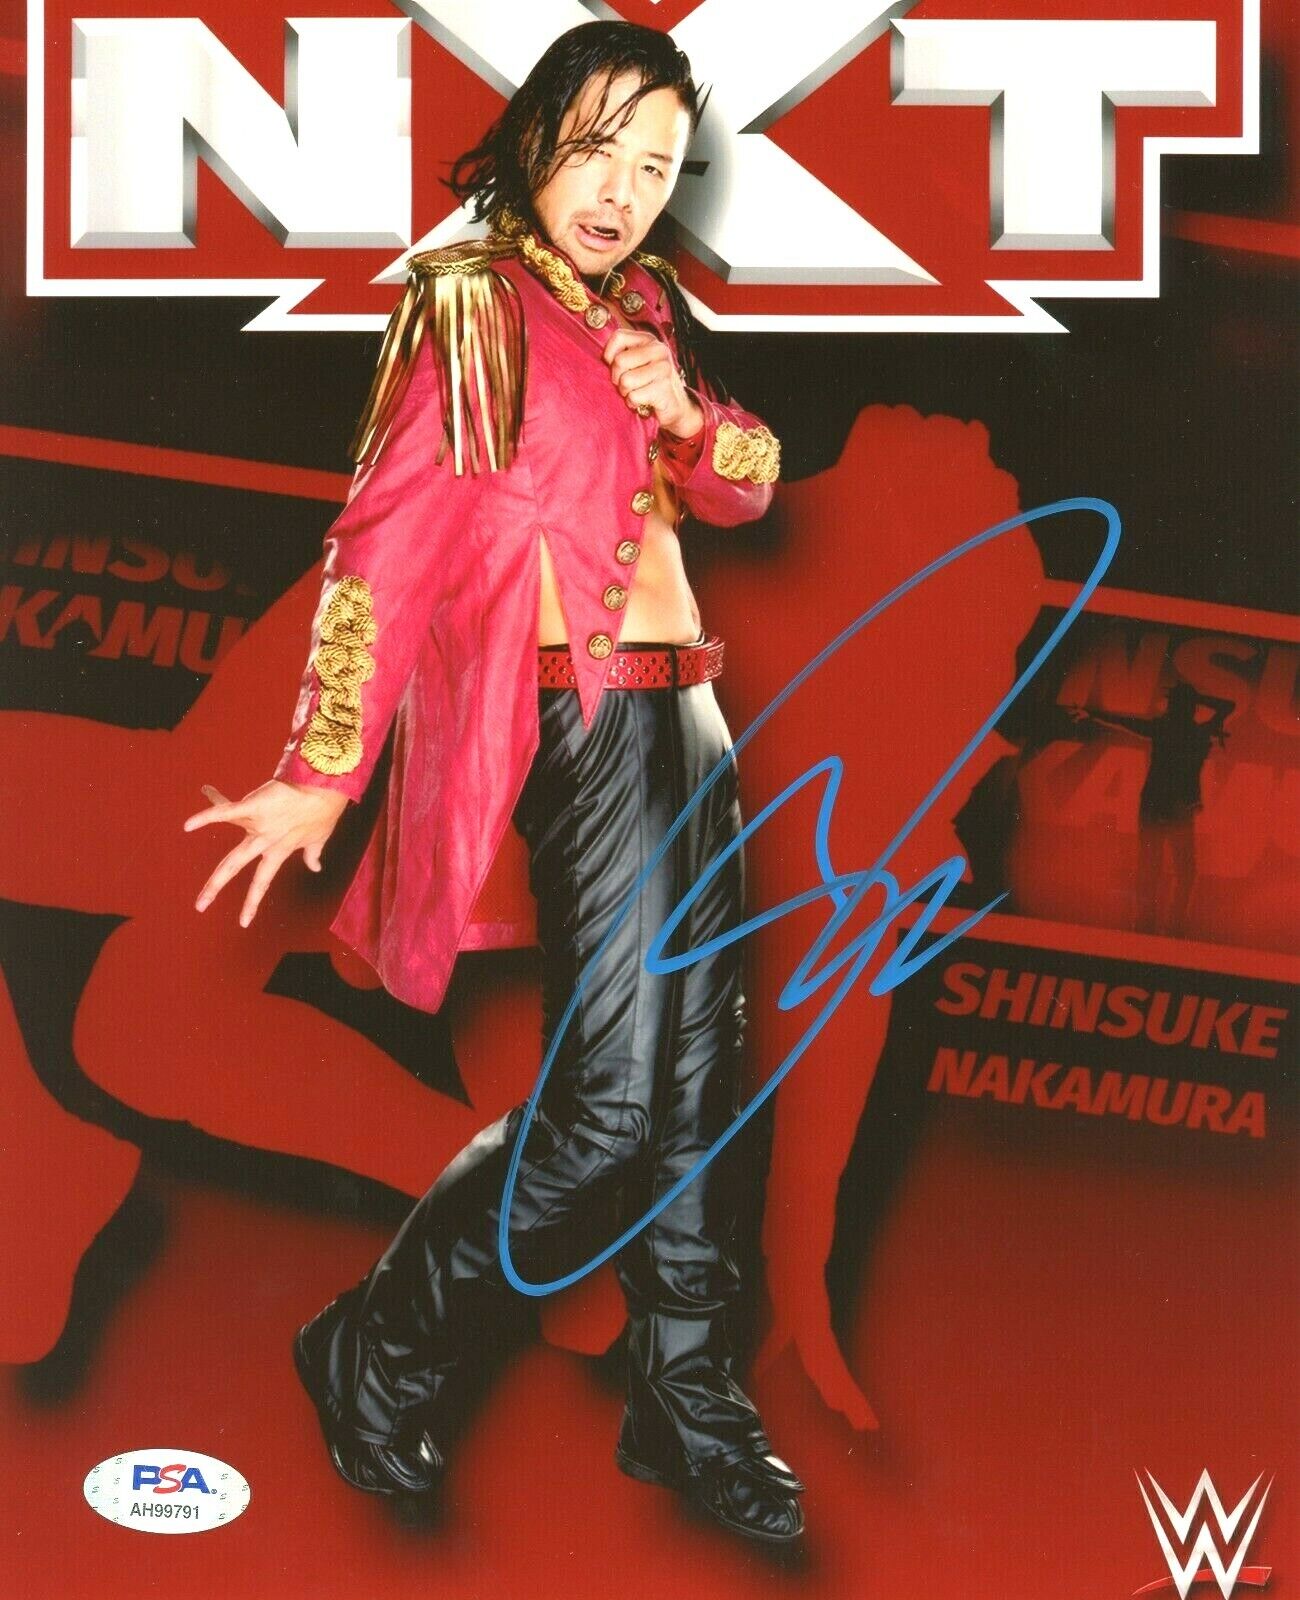 WWE SHINSUKE NAKAMURA HAND SIGNED AUTOGRAPHED 8X10 Photo Poster painting WITH PROOF & PSA COA 4